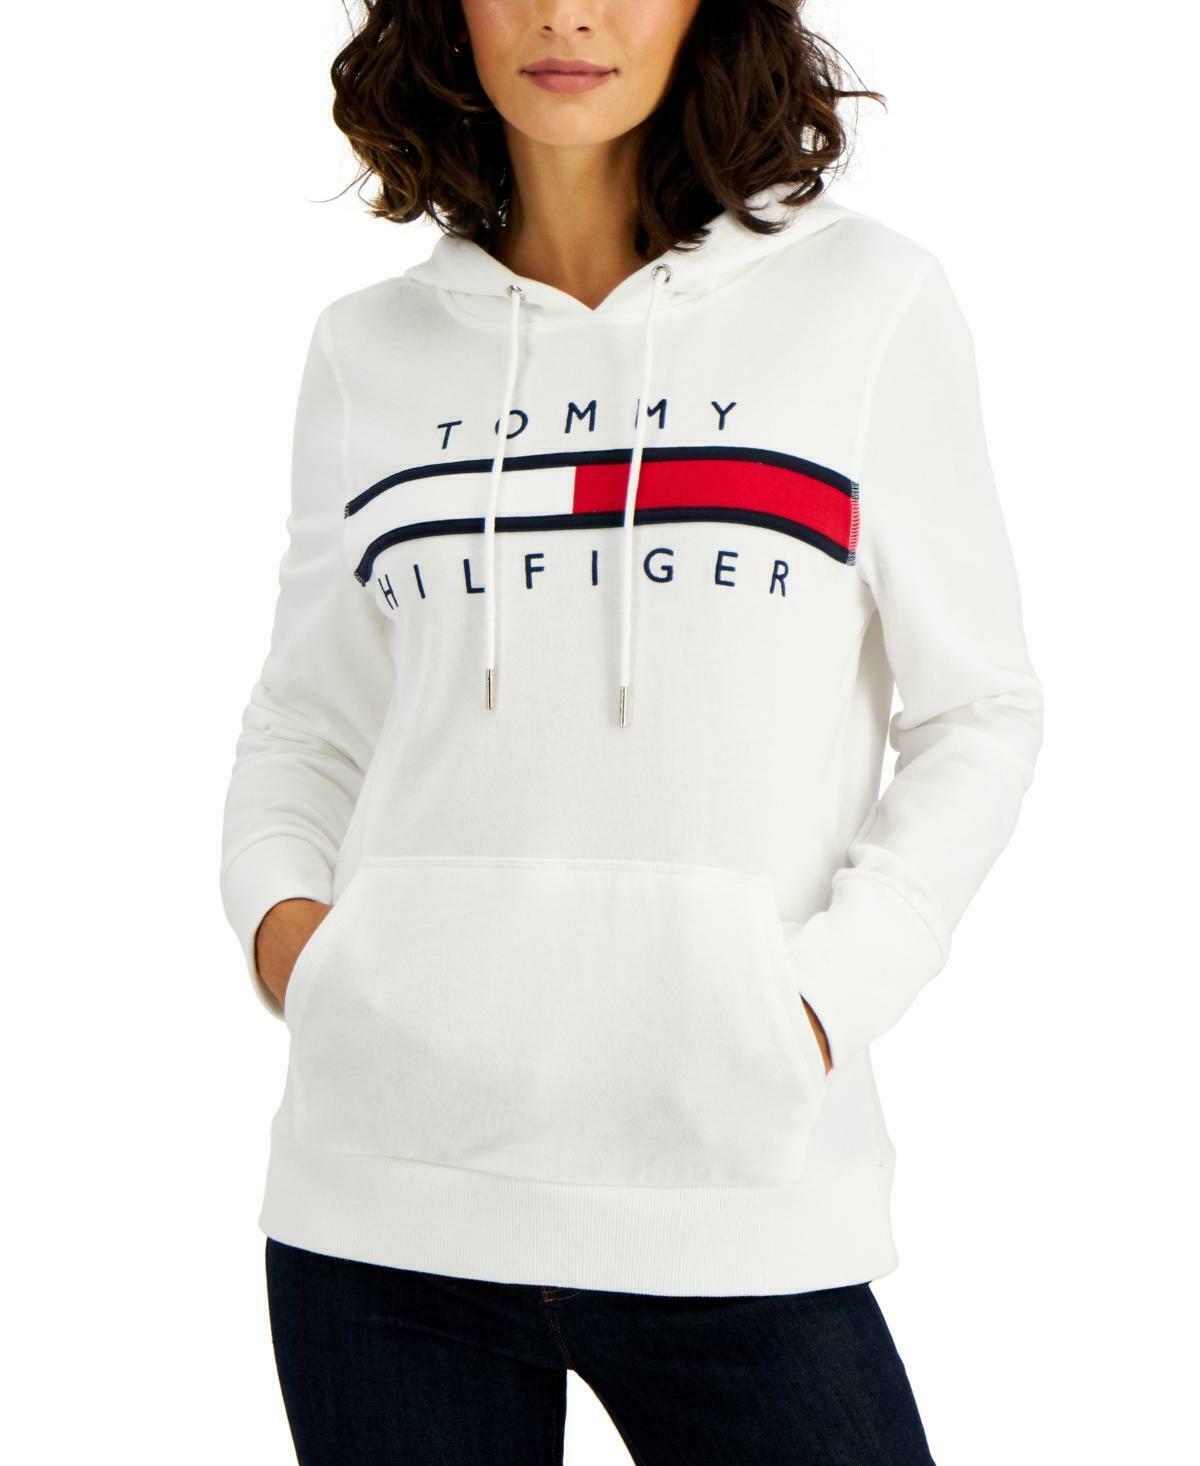 Tommy Hilfiger Women's Graphic Hoodie Sweatshirt, Rich White, Large